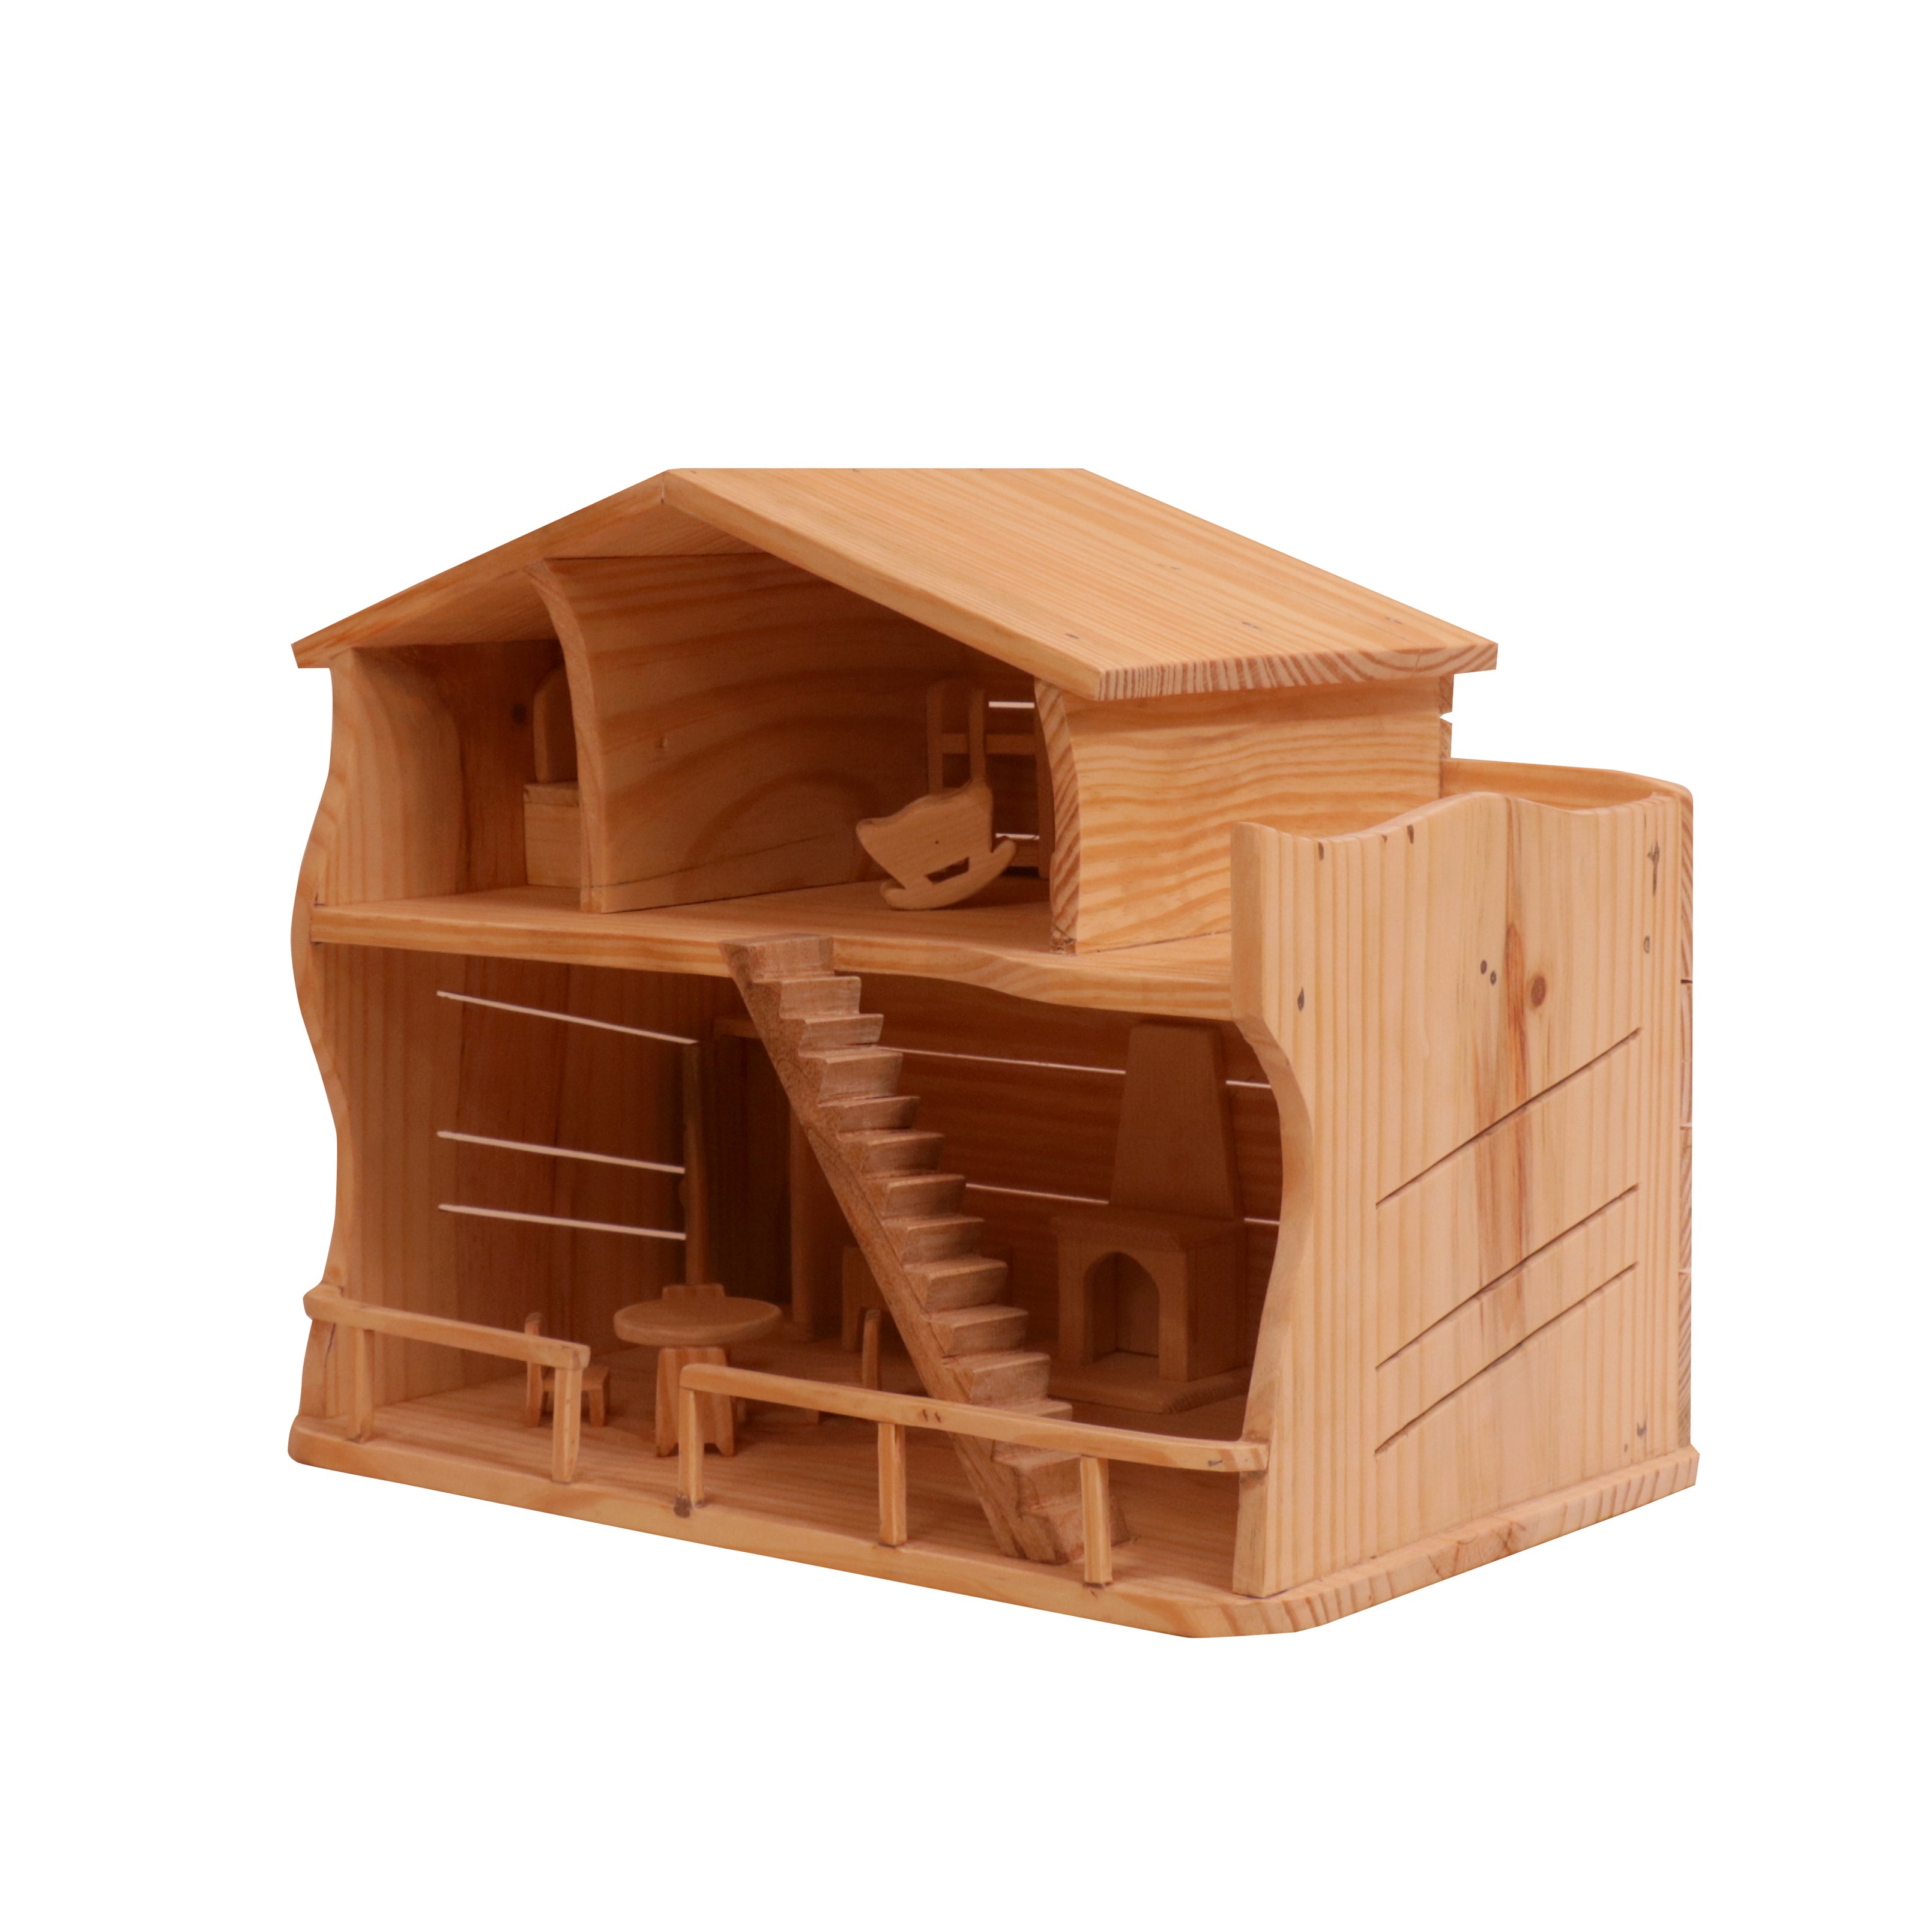 Pine wood Miniature House décor Wooden House